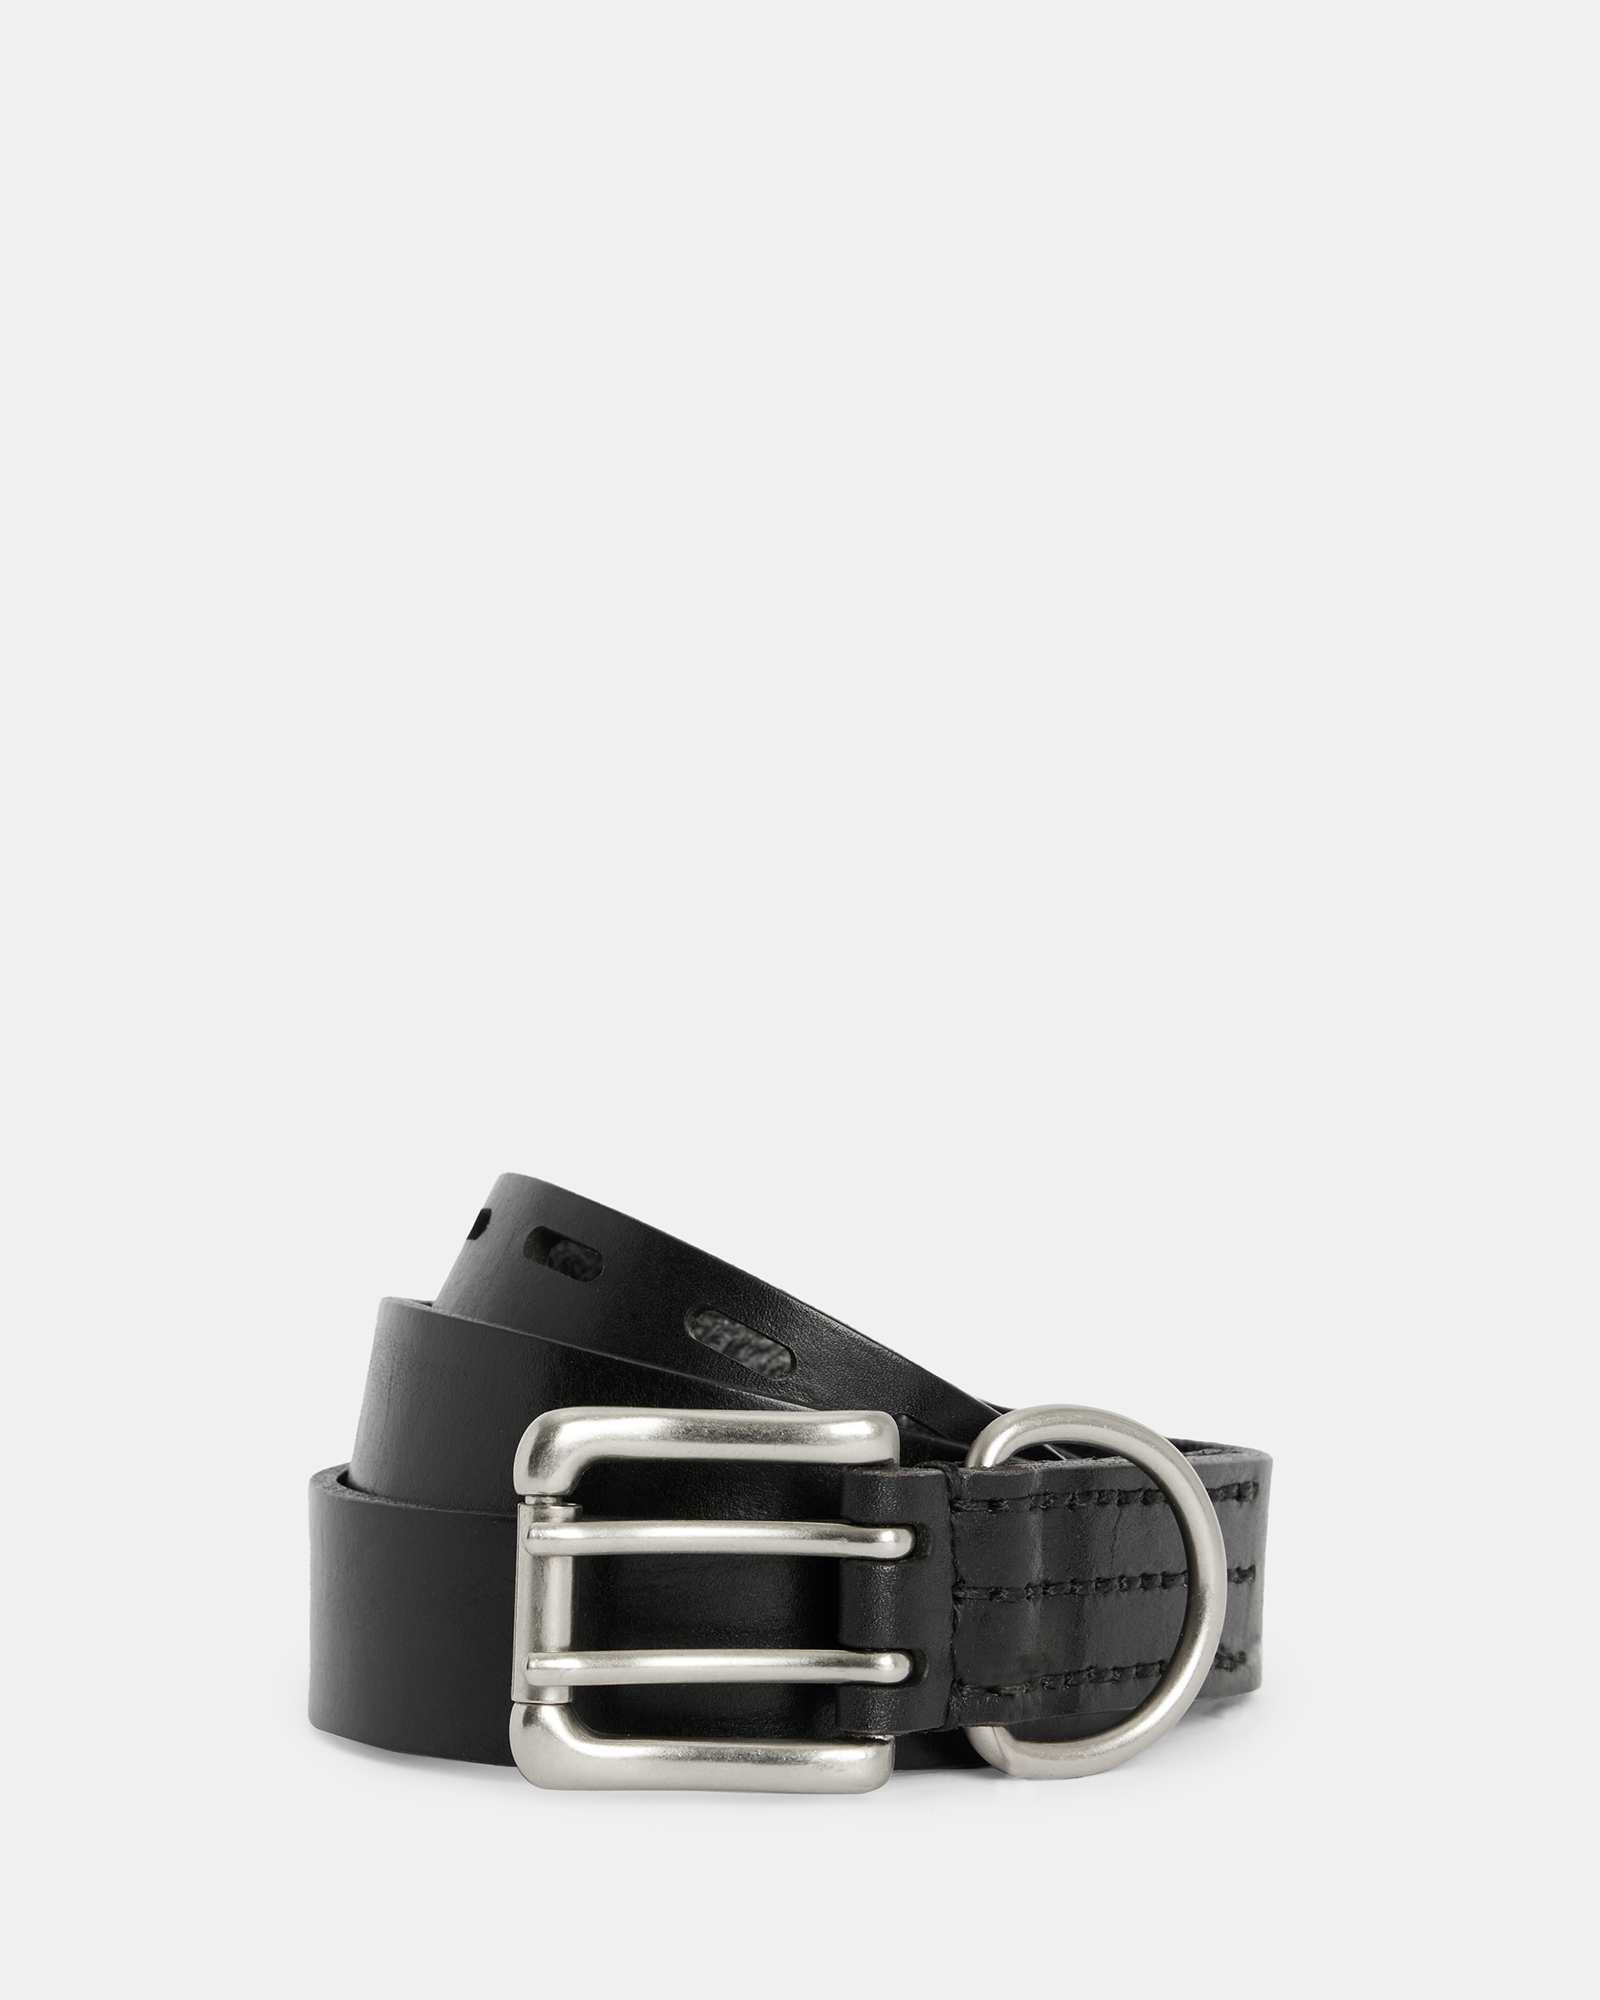 Drew Shiny Leather Double Prong Belt BLACK/DULL NICKEL | ALLSAINTS